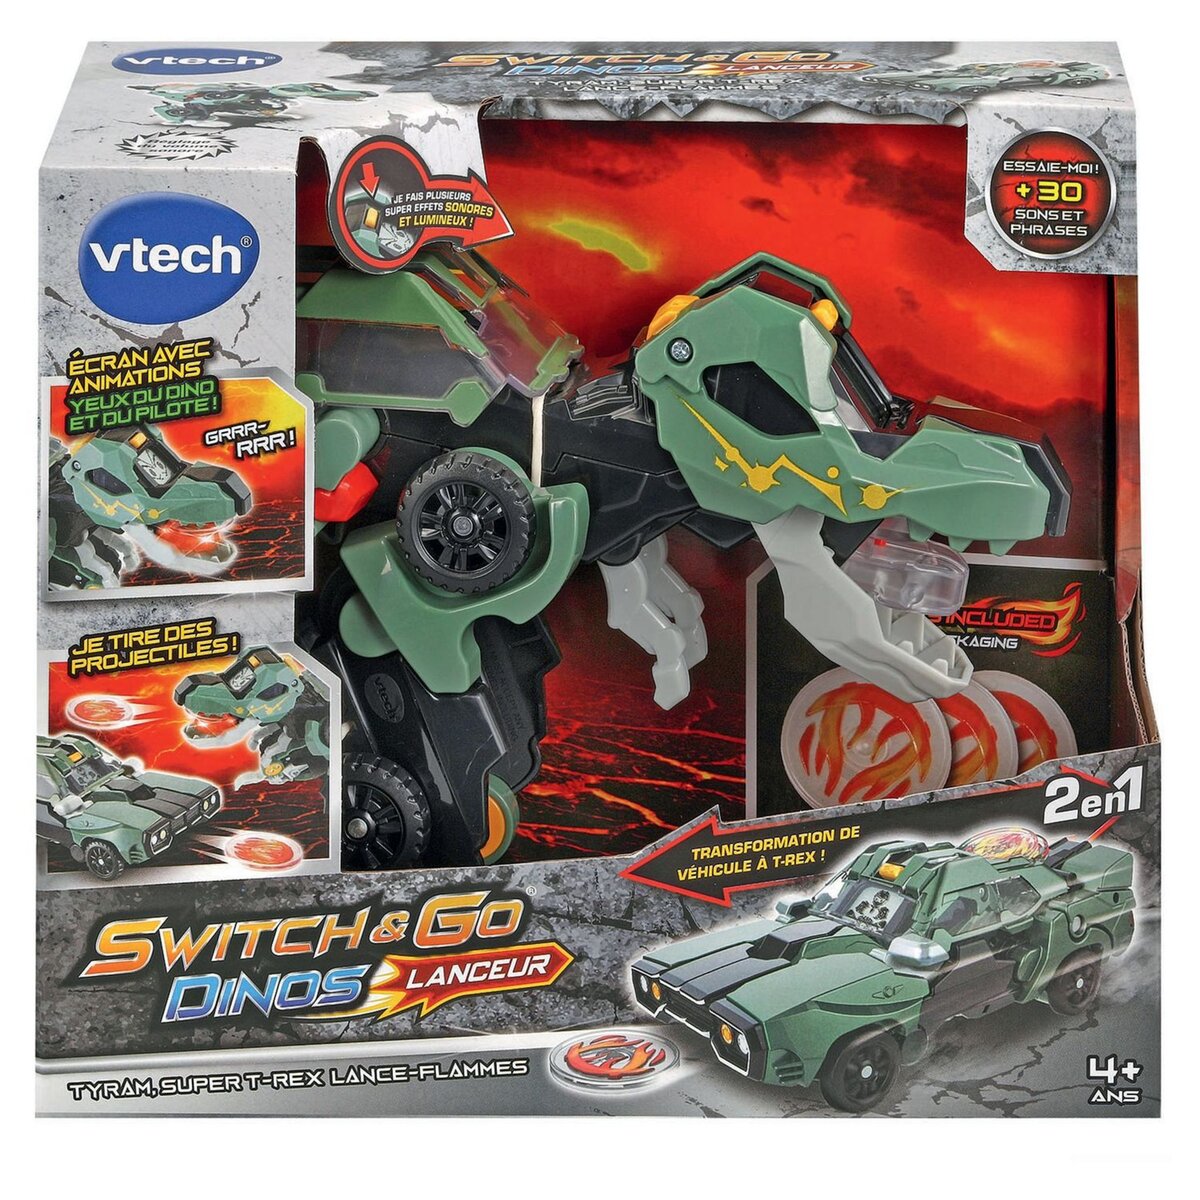 VTech - Switch & Go Dinos Lanceur, Dinosaure Son…